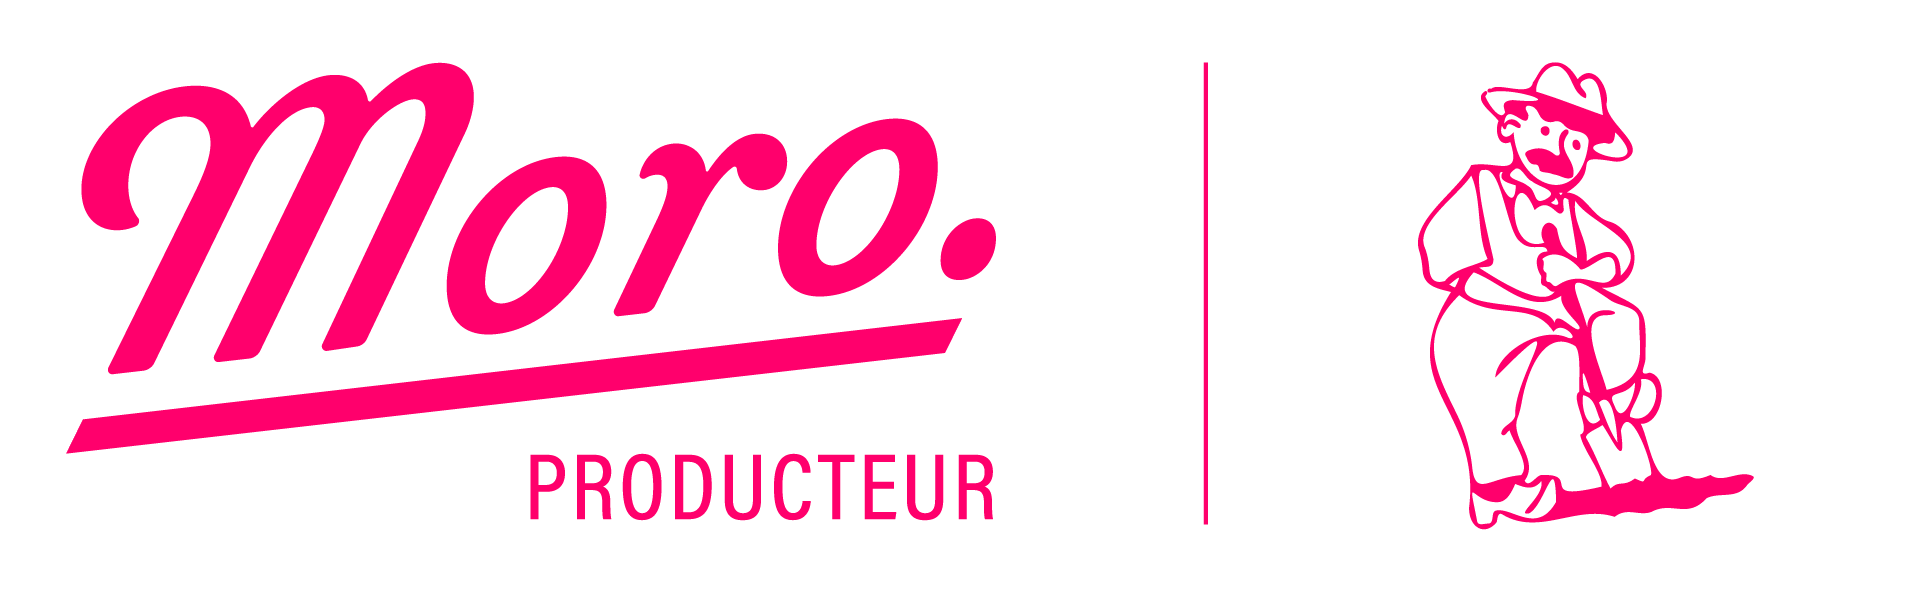 moro-producteur-logo_Plan de travail 1